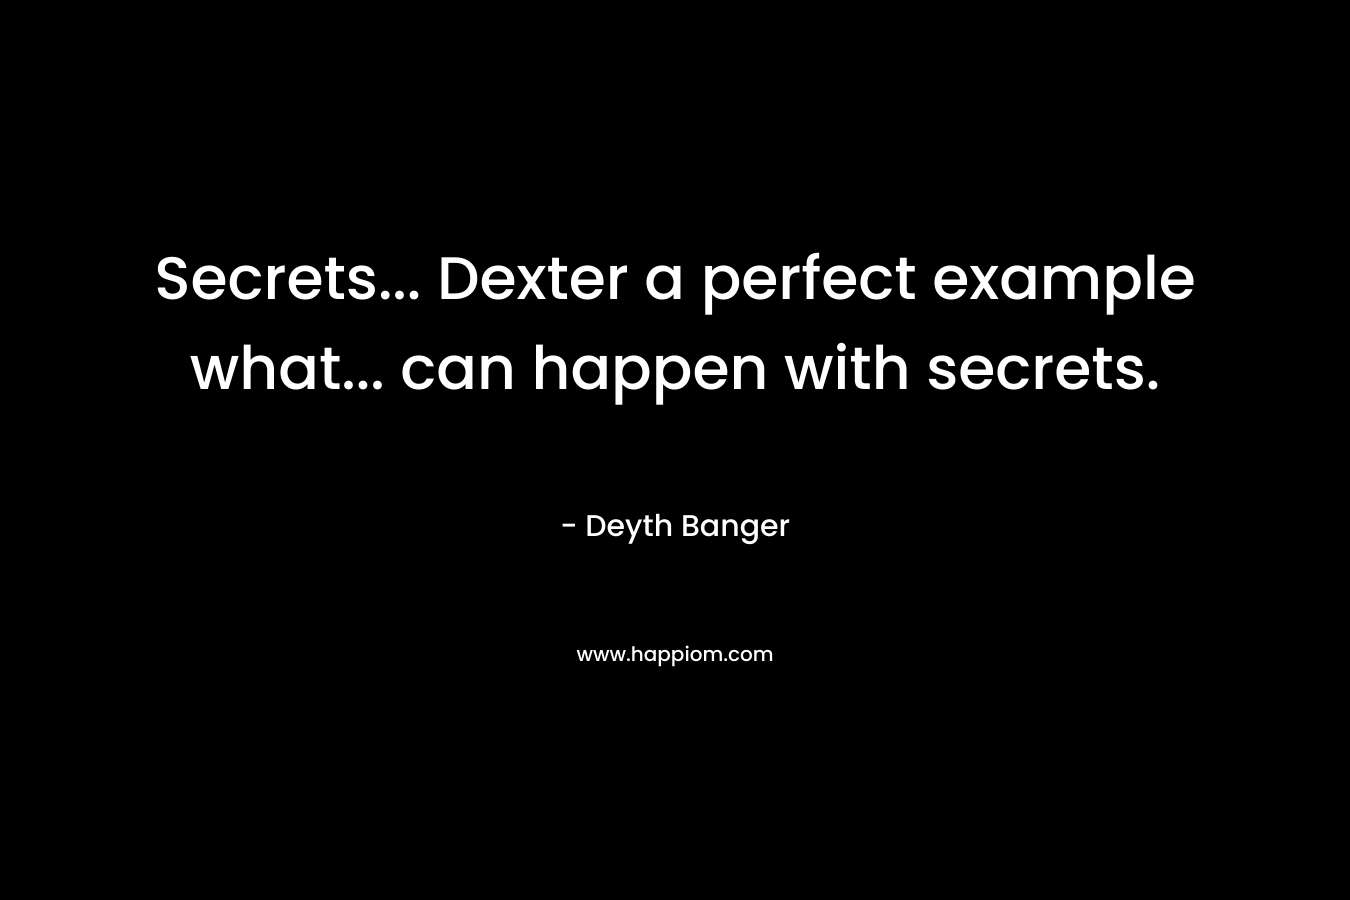 Secrets... Dexter a perfect example what... can happen with secrets.